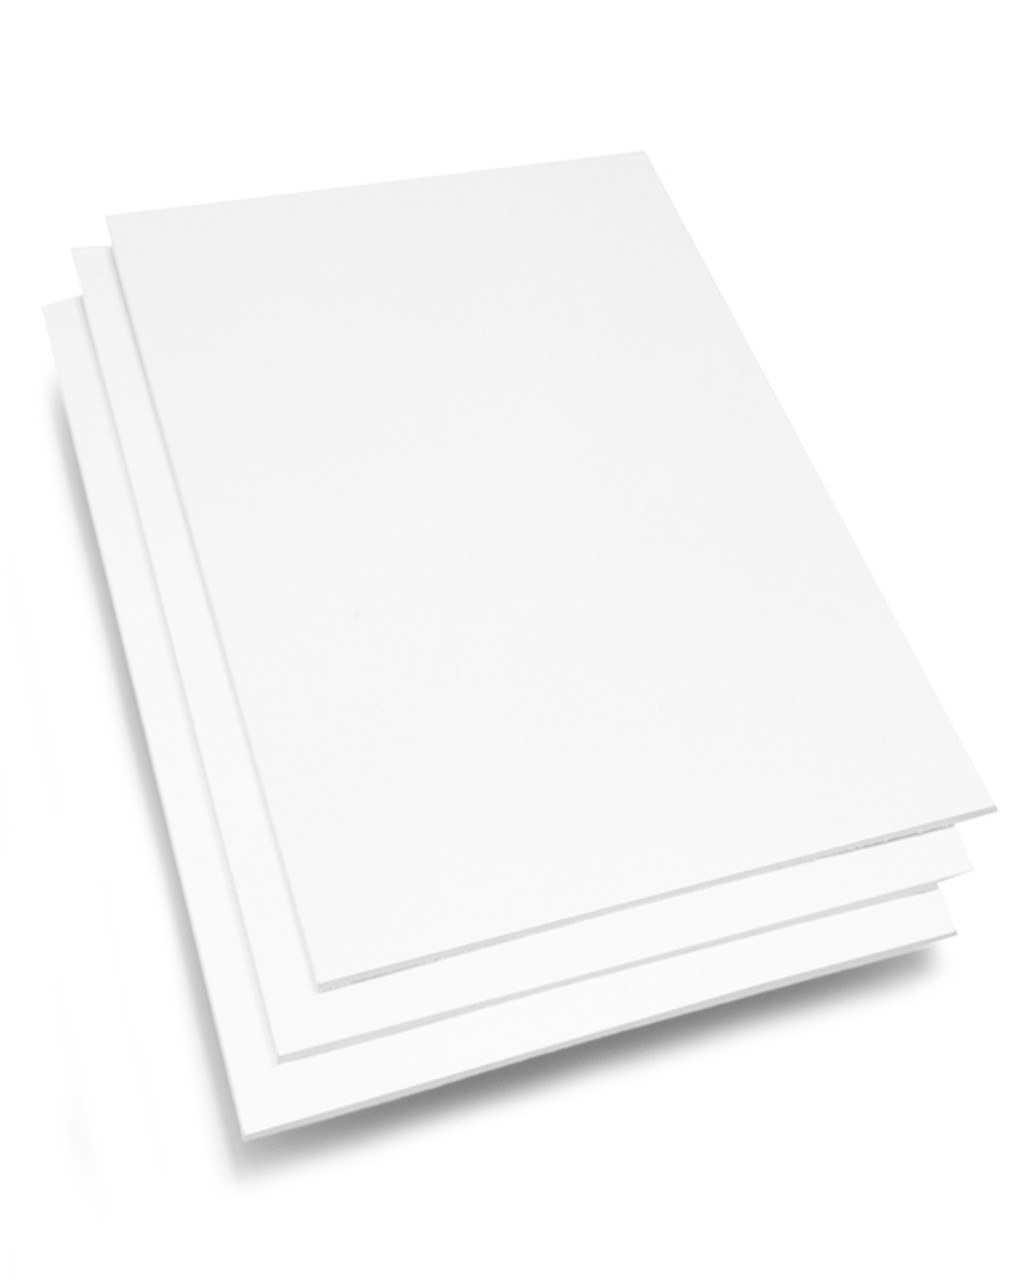 20x24 Standard Mat Board - Blank - Shop Now